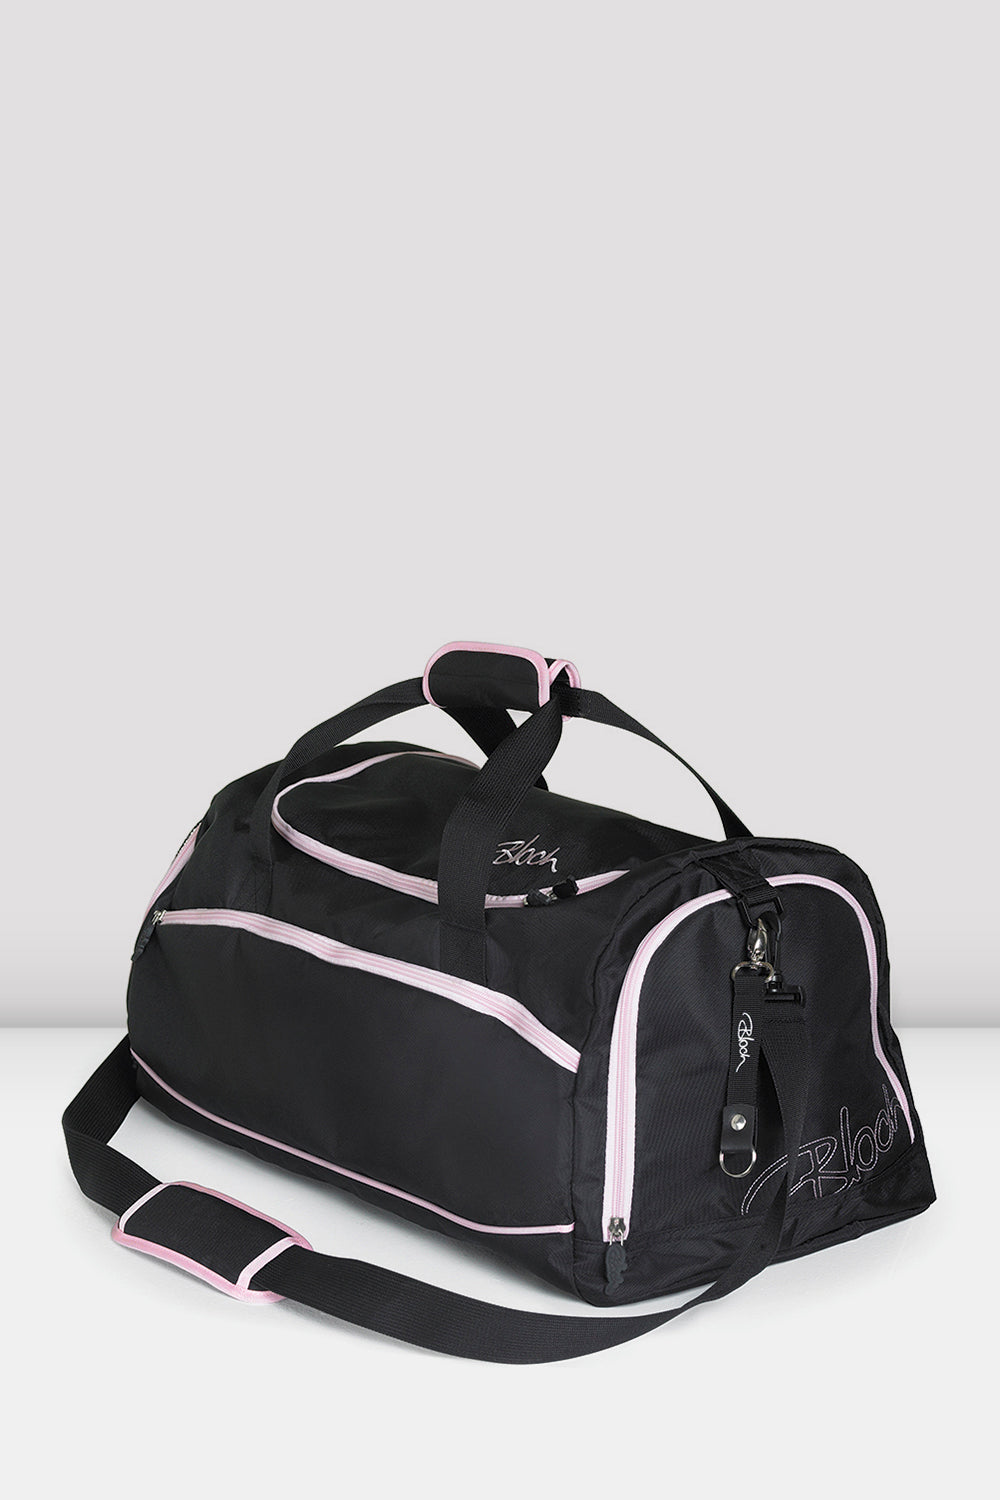 BLOCH Ballet Duffel Bag, Black Pink Nylon